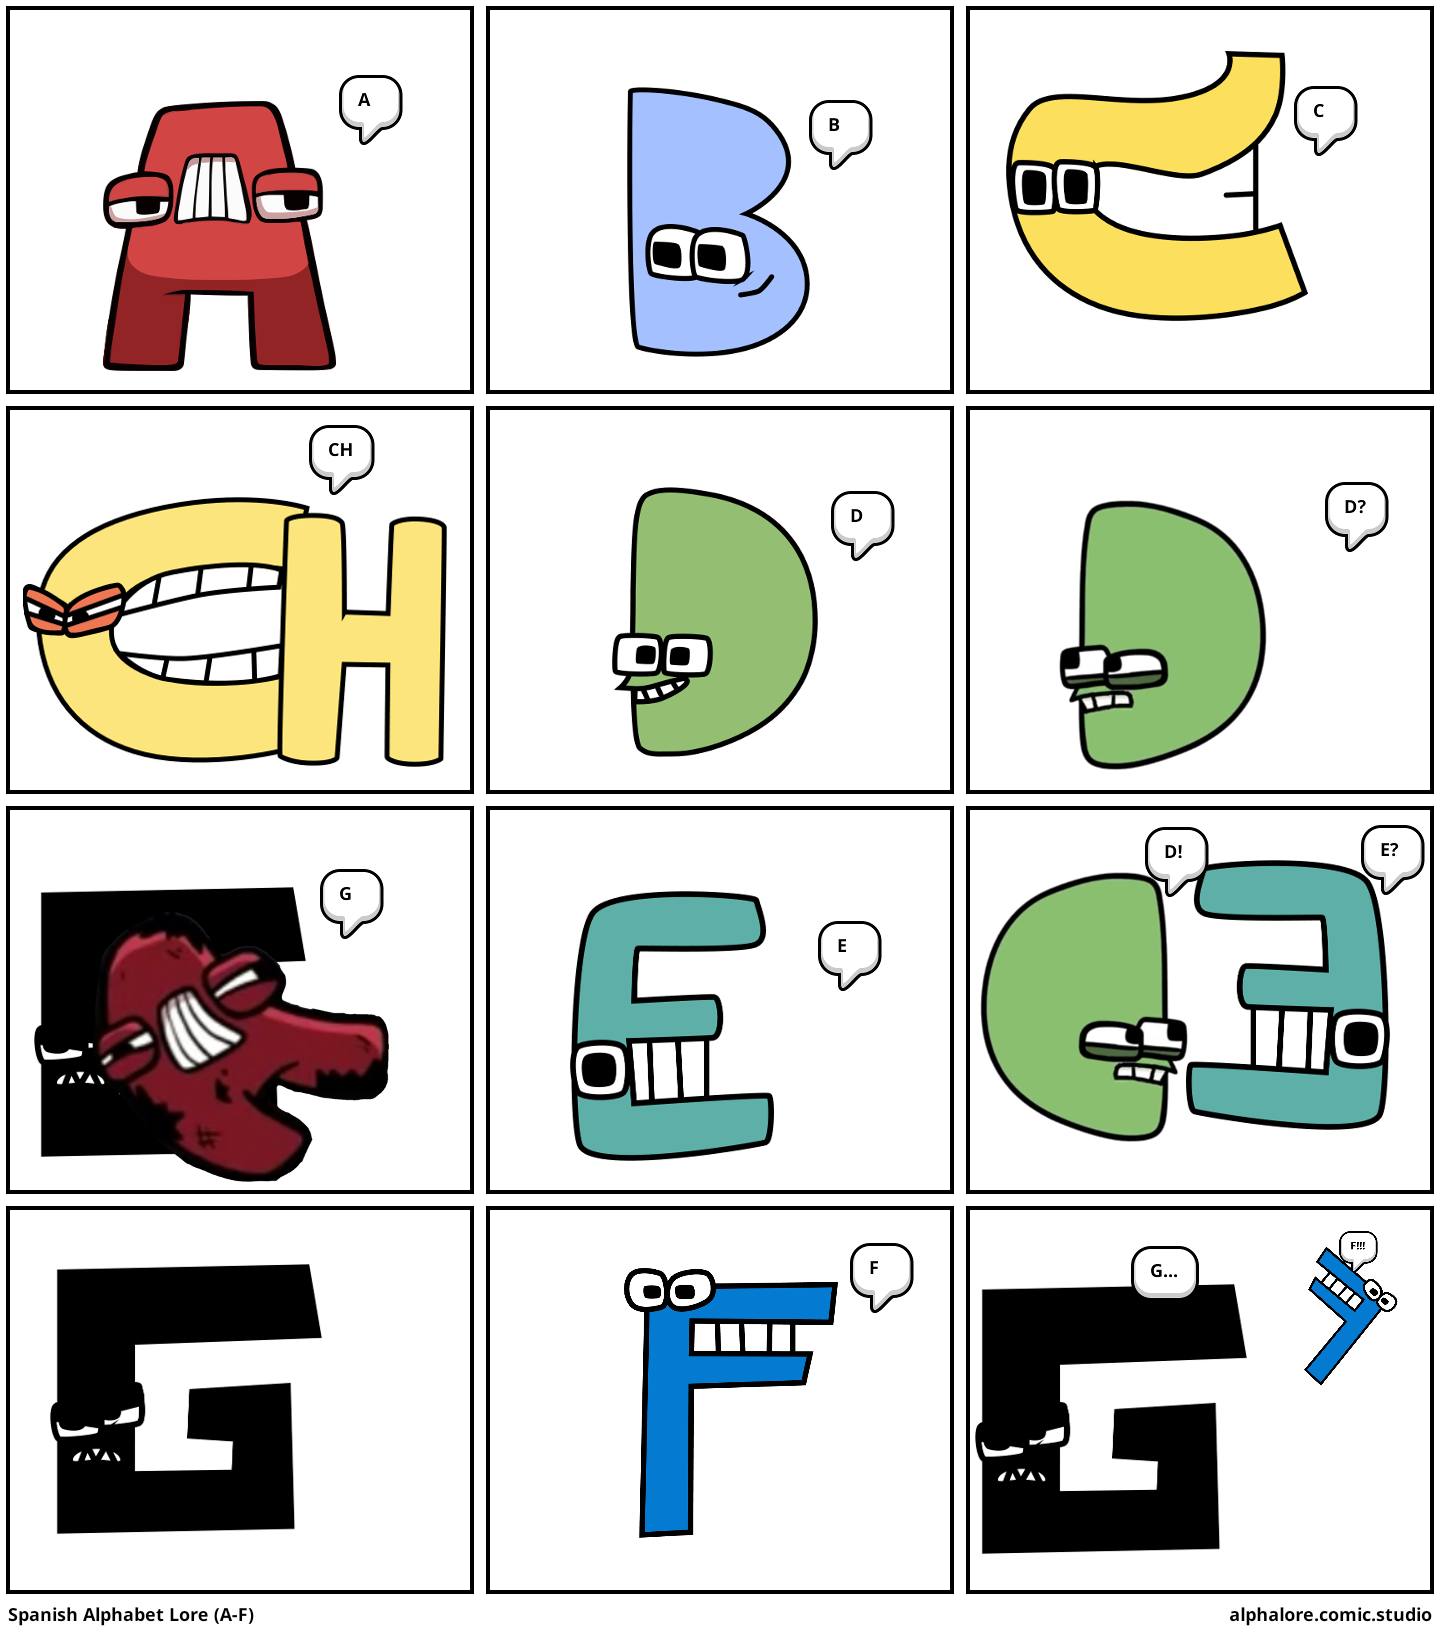 Spanish alphabet lore - Comic Studio